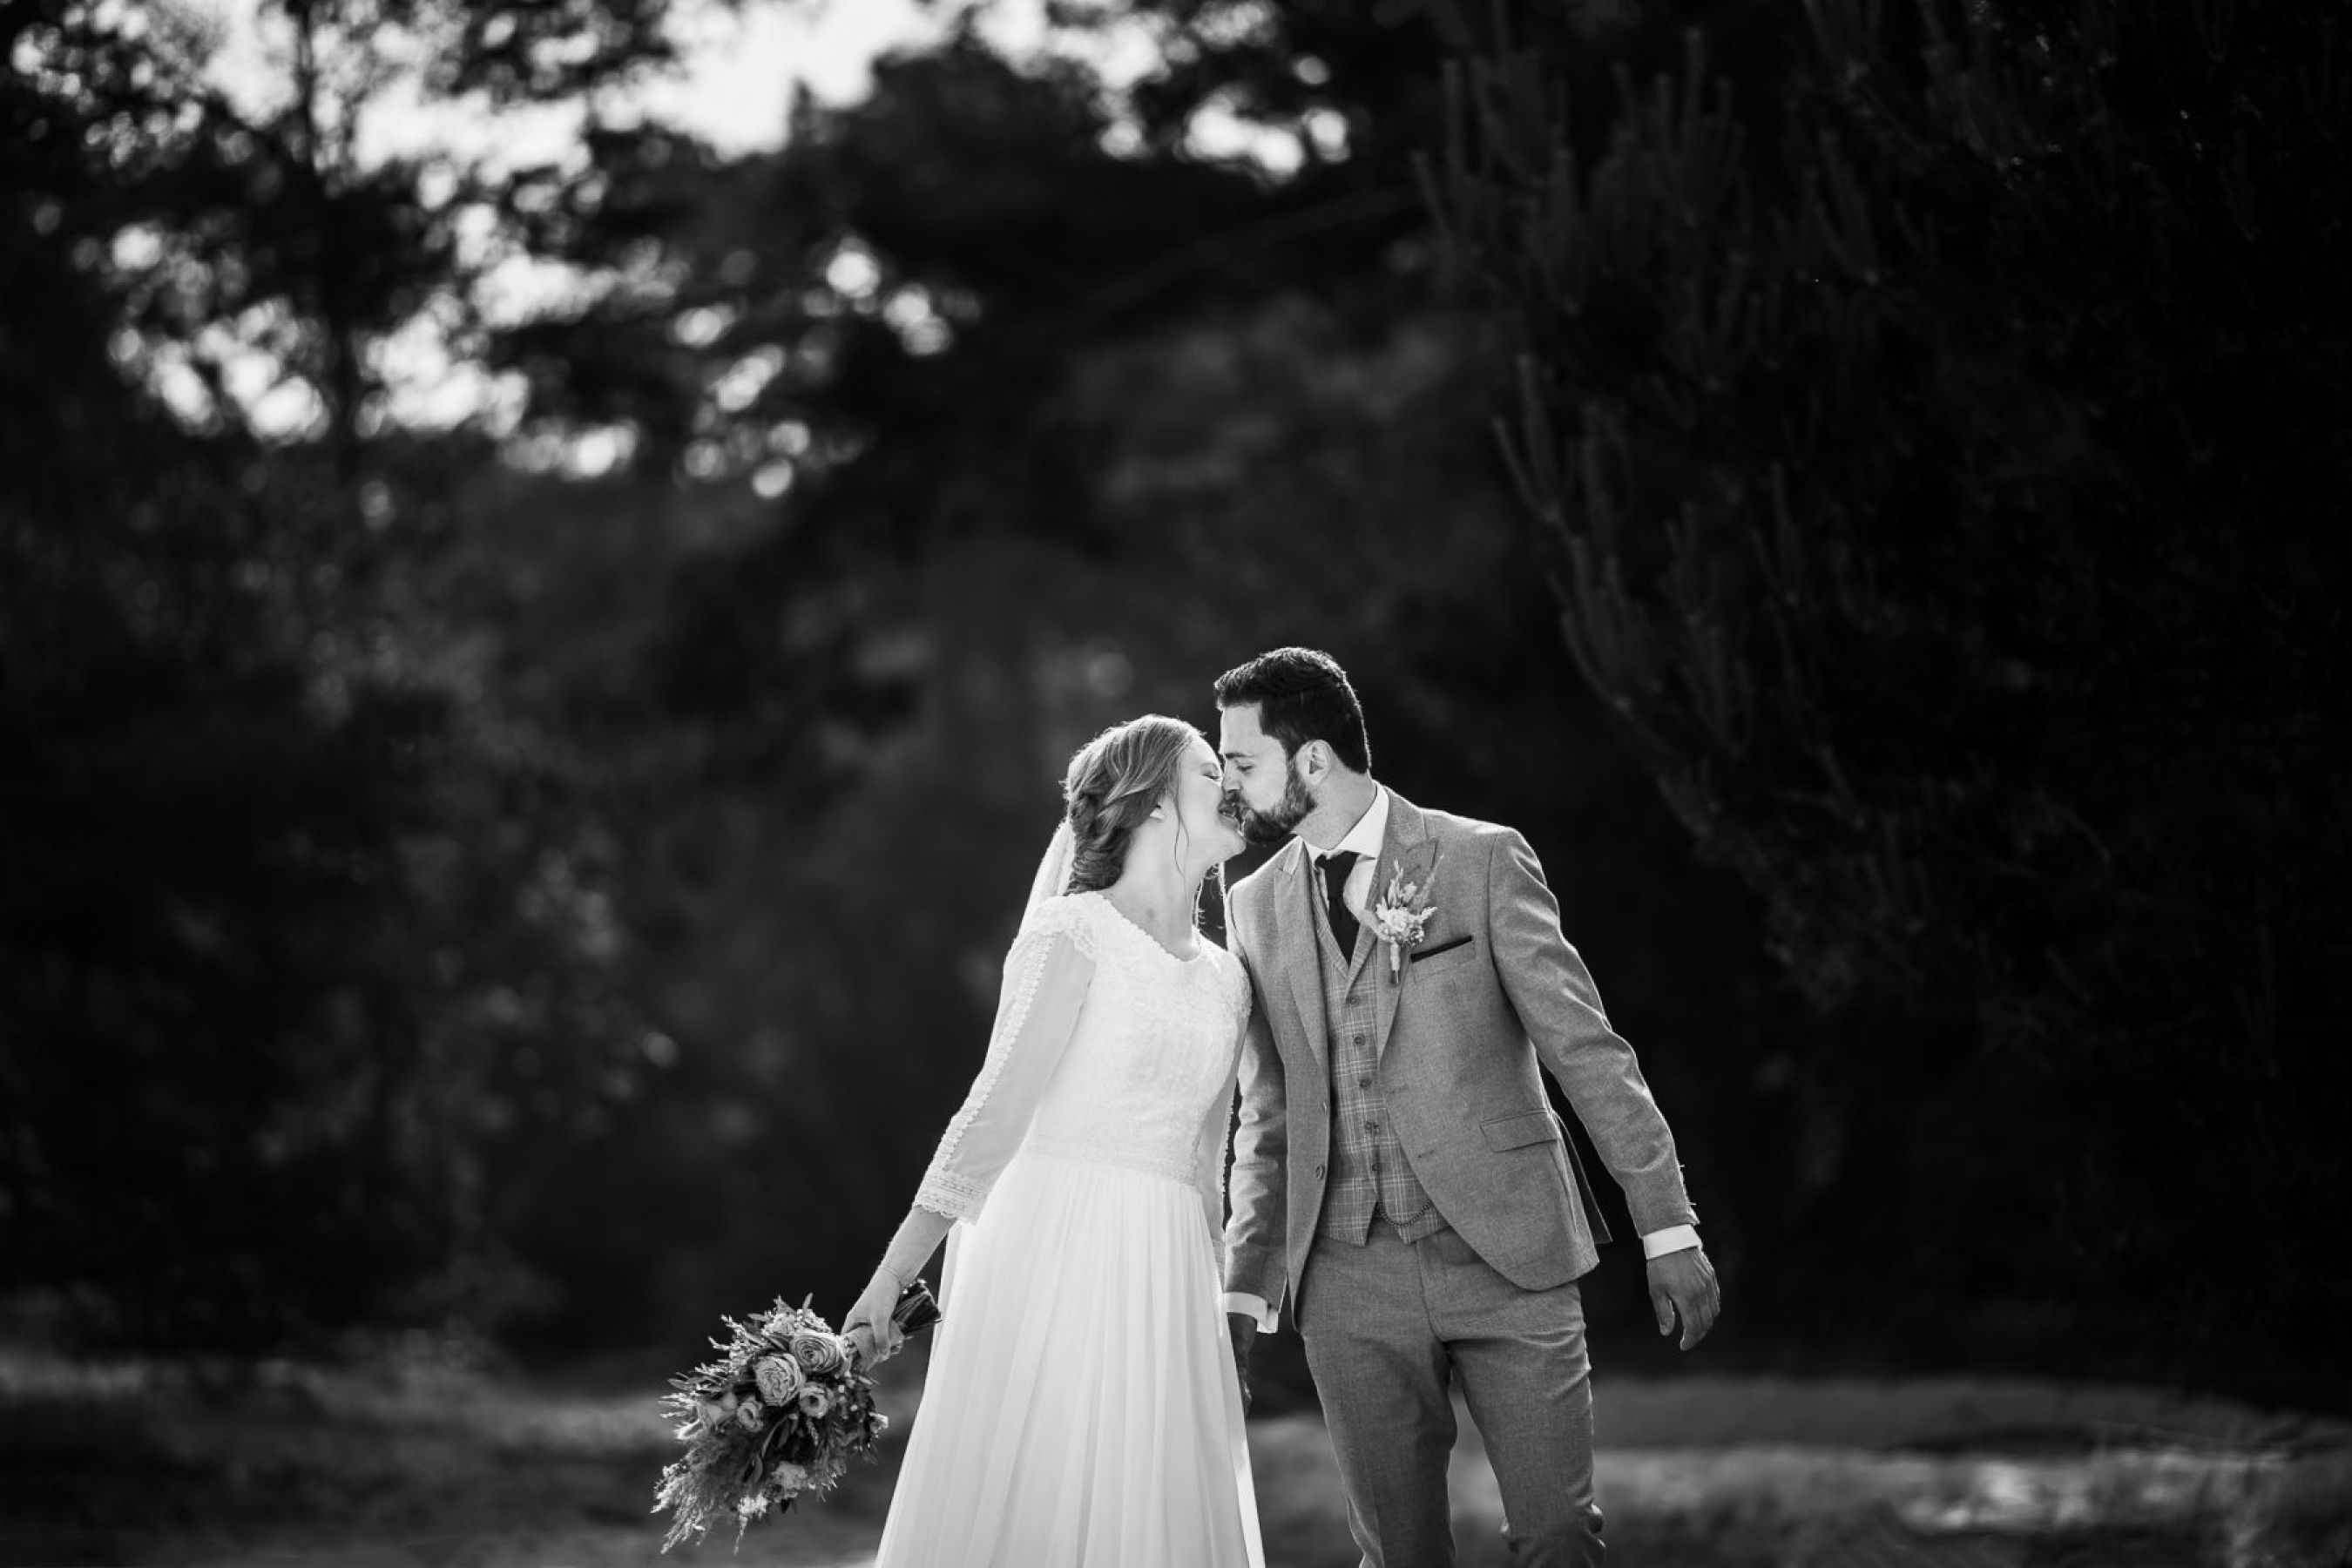 Marinus-Dianne-Jan-van-de-Maat-Bruidsfotografie-Weddings-Bruidsreportage-Trouwfotografie-Leersum